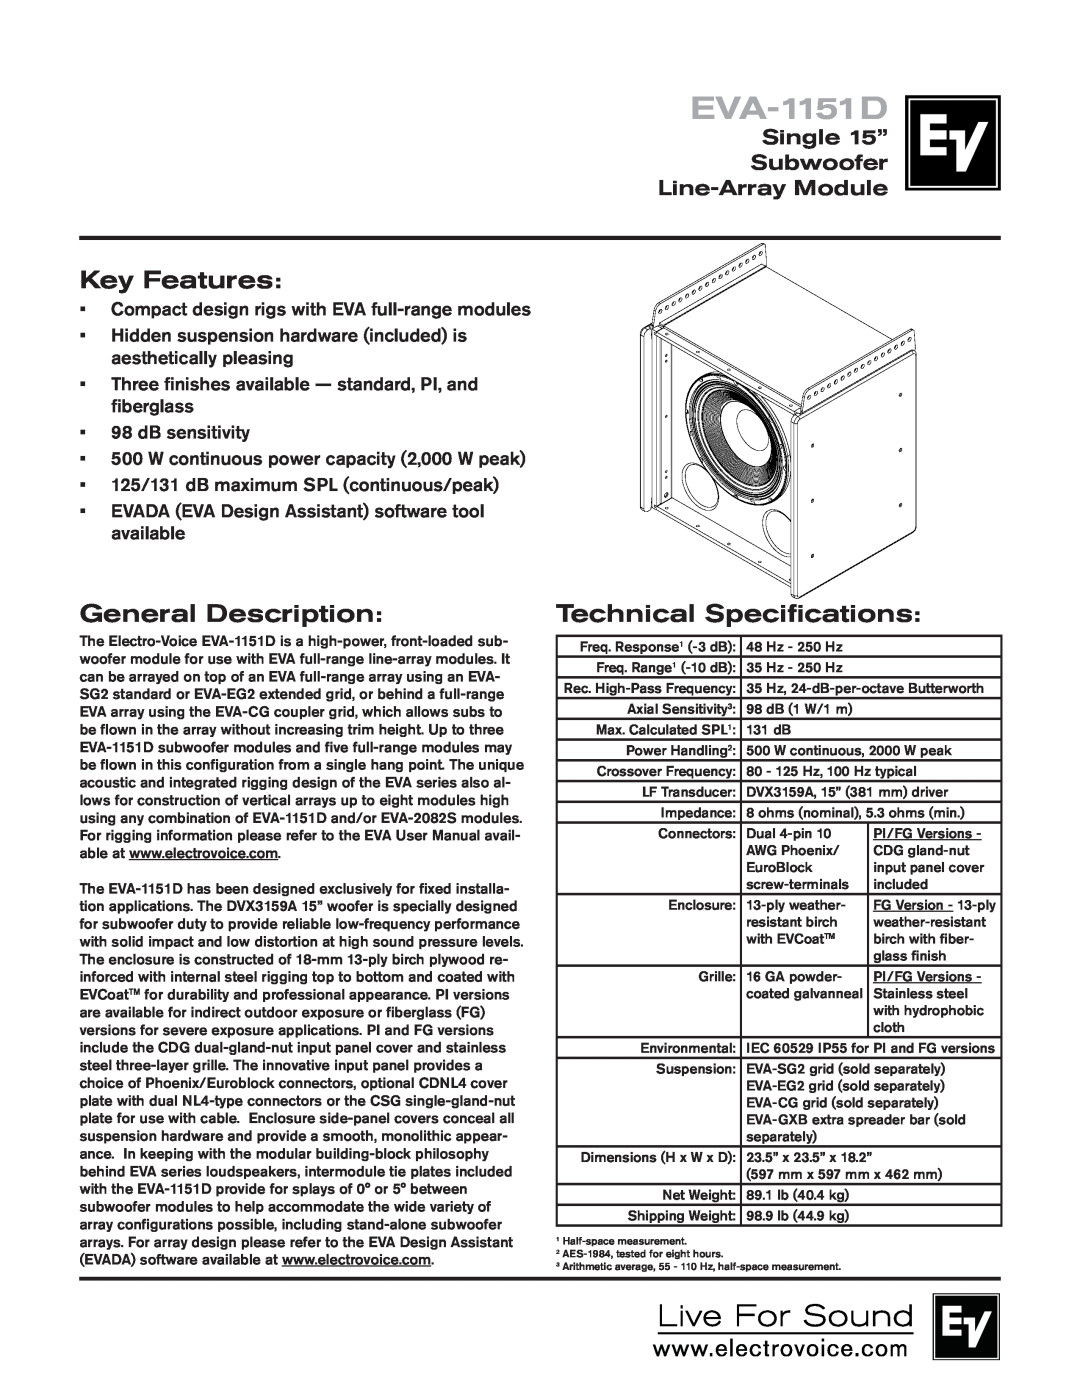 Electro-Voice EVA-1151D technical specifications Key Features, General Description, Technical Specifications 